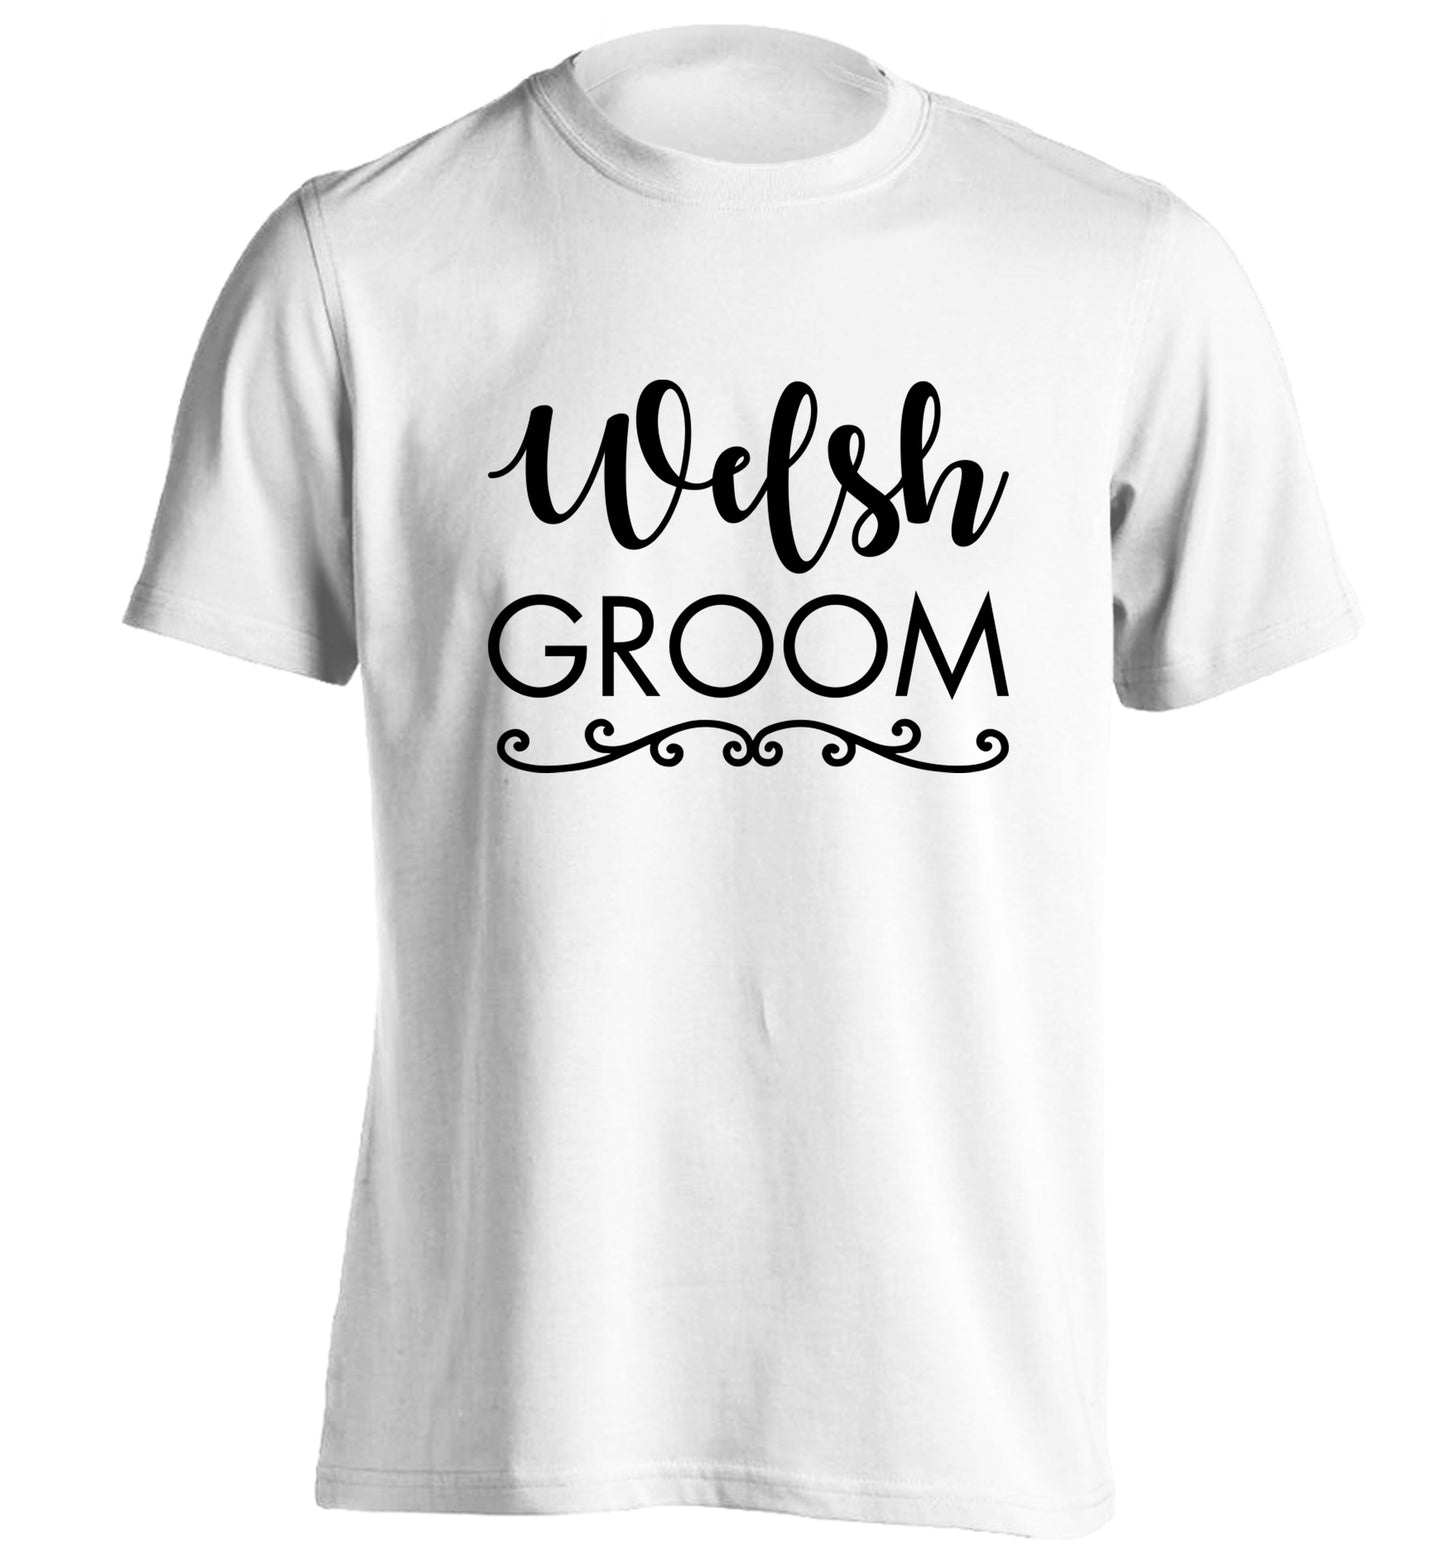 Welsh groom adults unisex white Tshirt 2XL